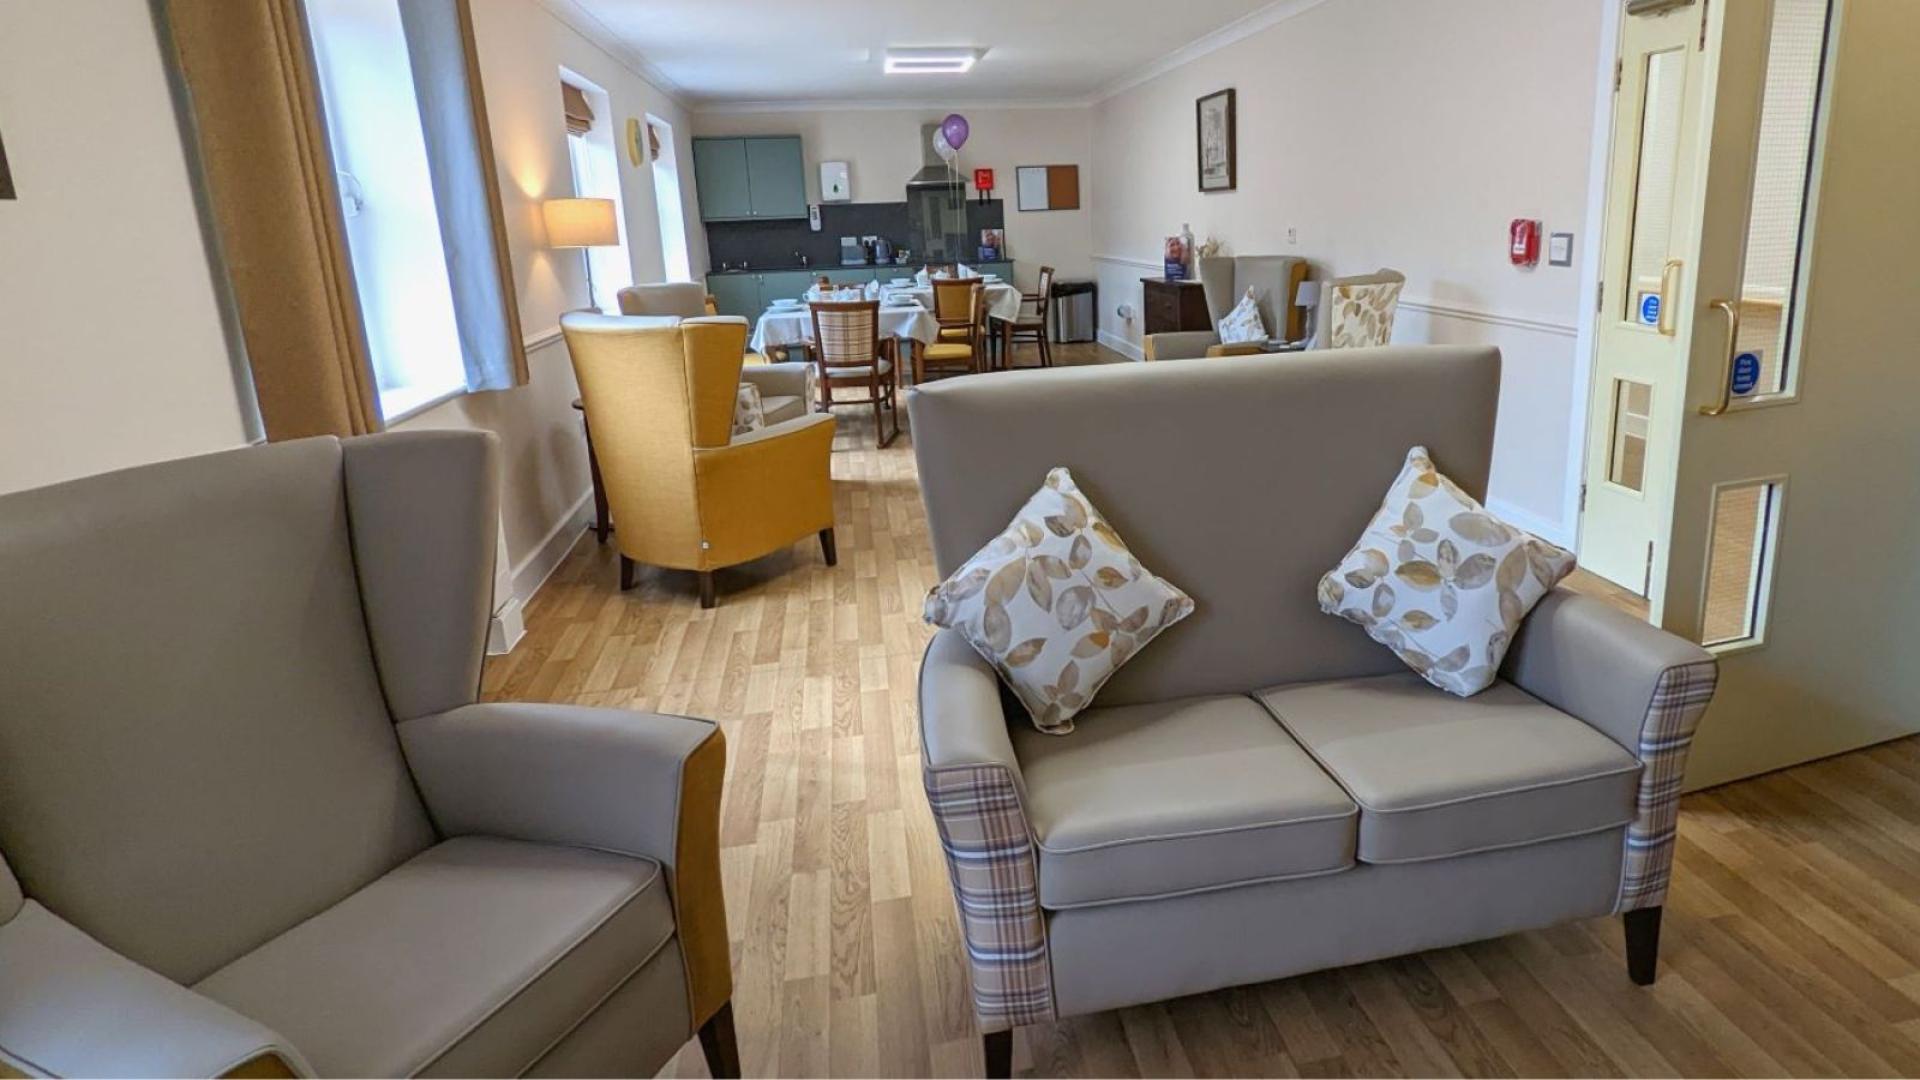 Comfortable living area at Middleton Park Lodge Nursing Home in Leeds